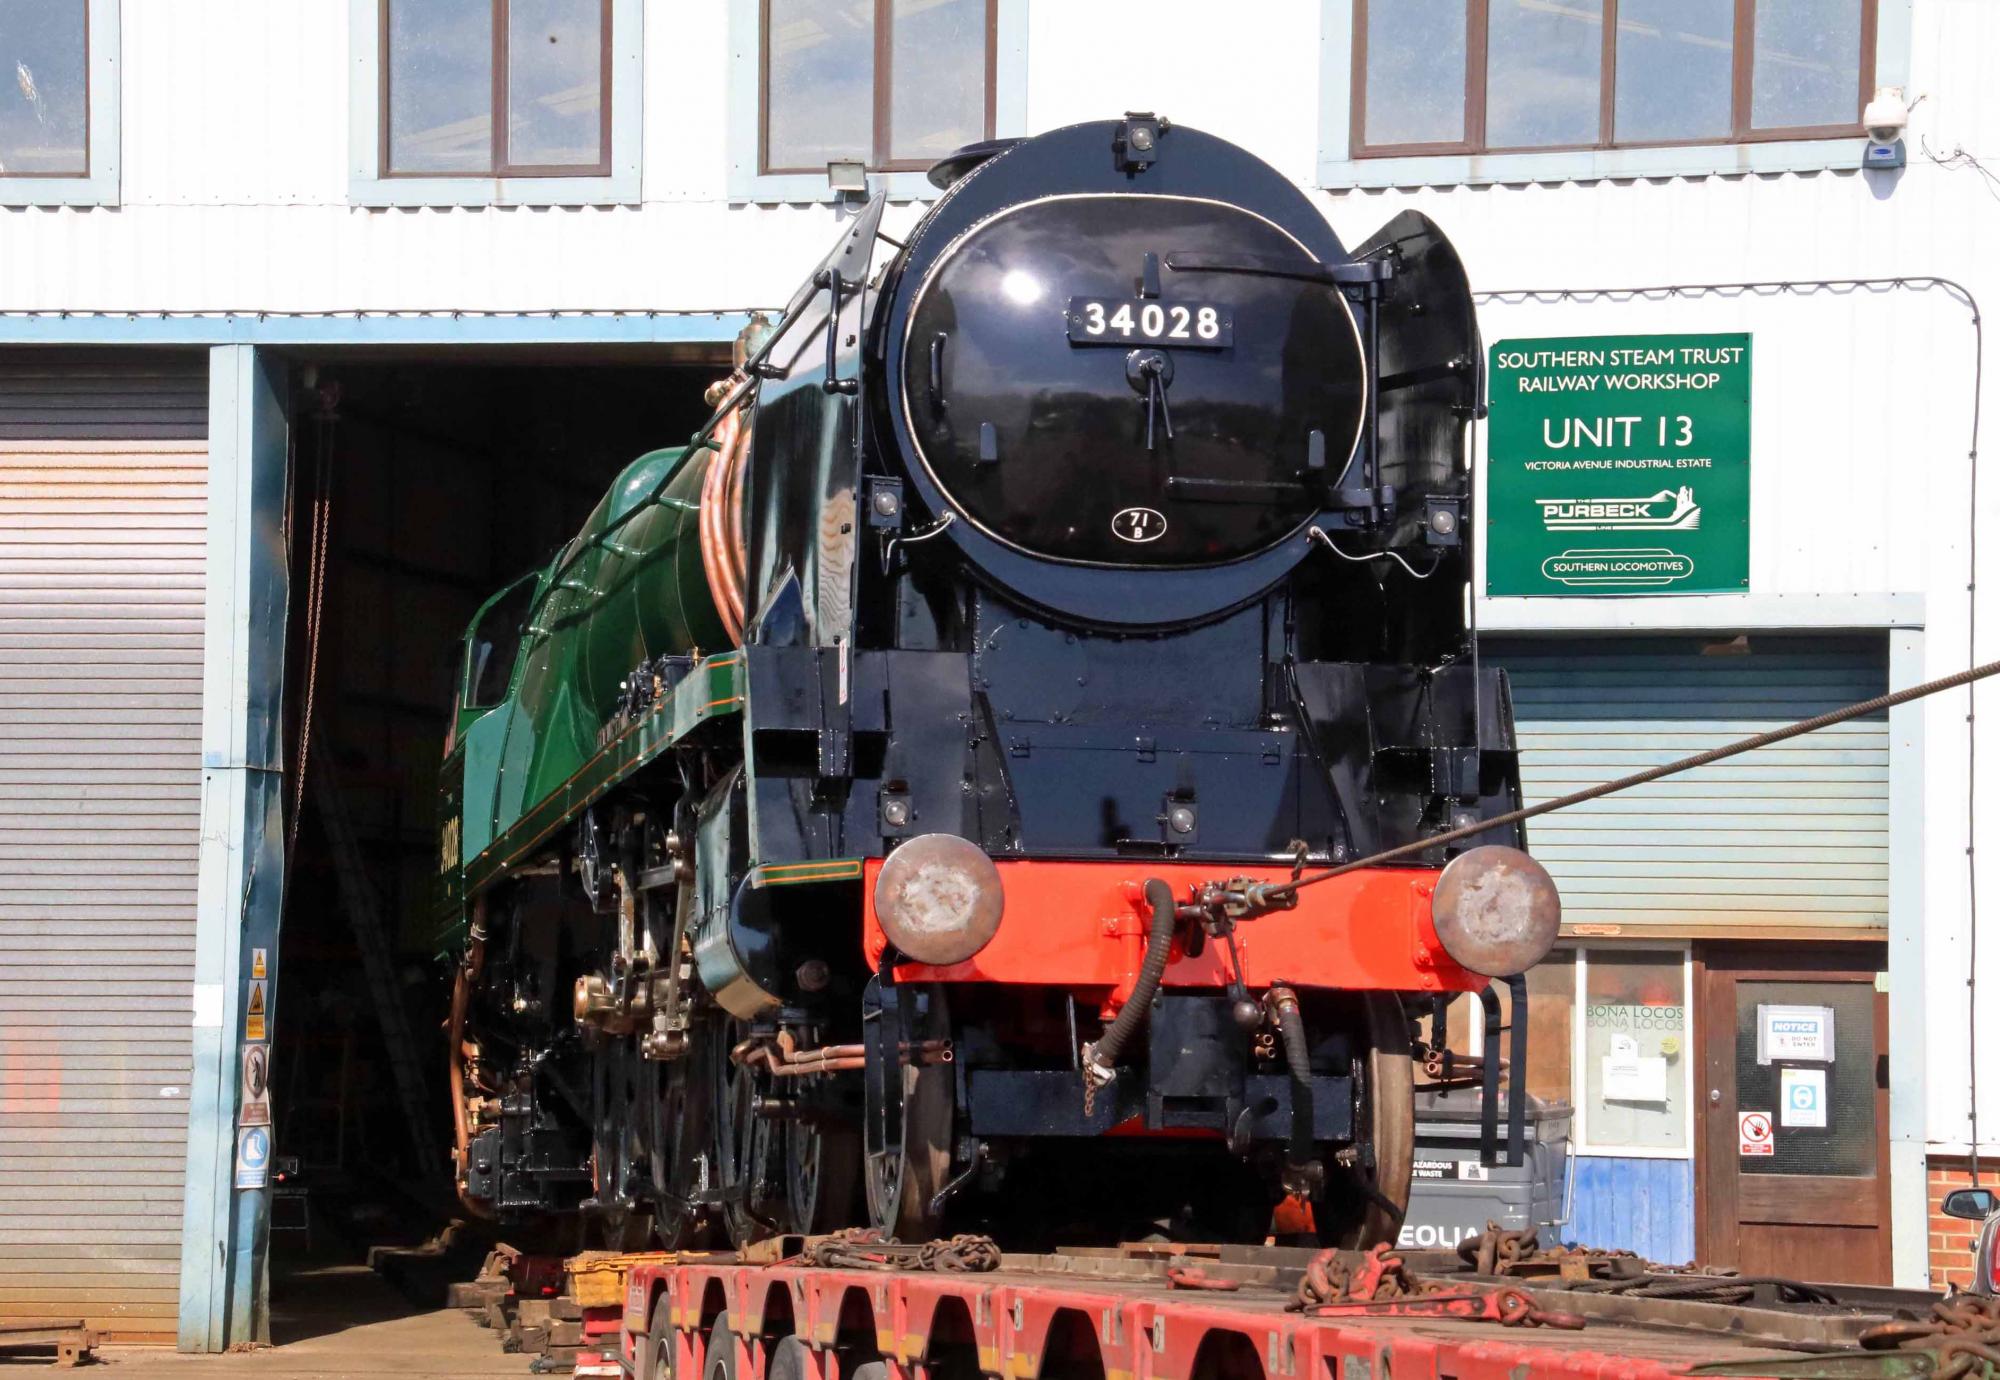 Eddystone steam locomotive - credit Andrew P.M. Wright